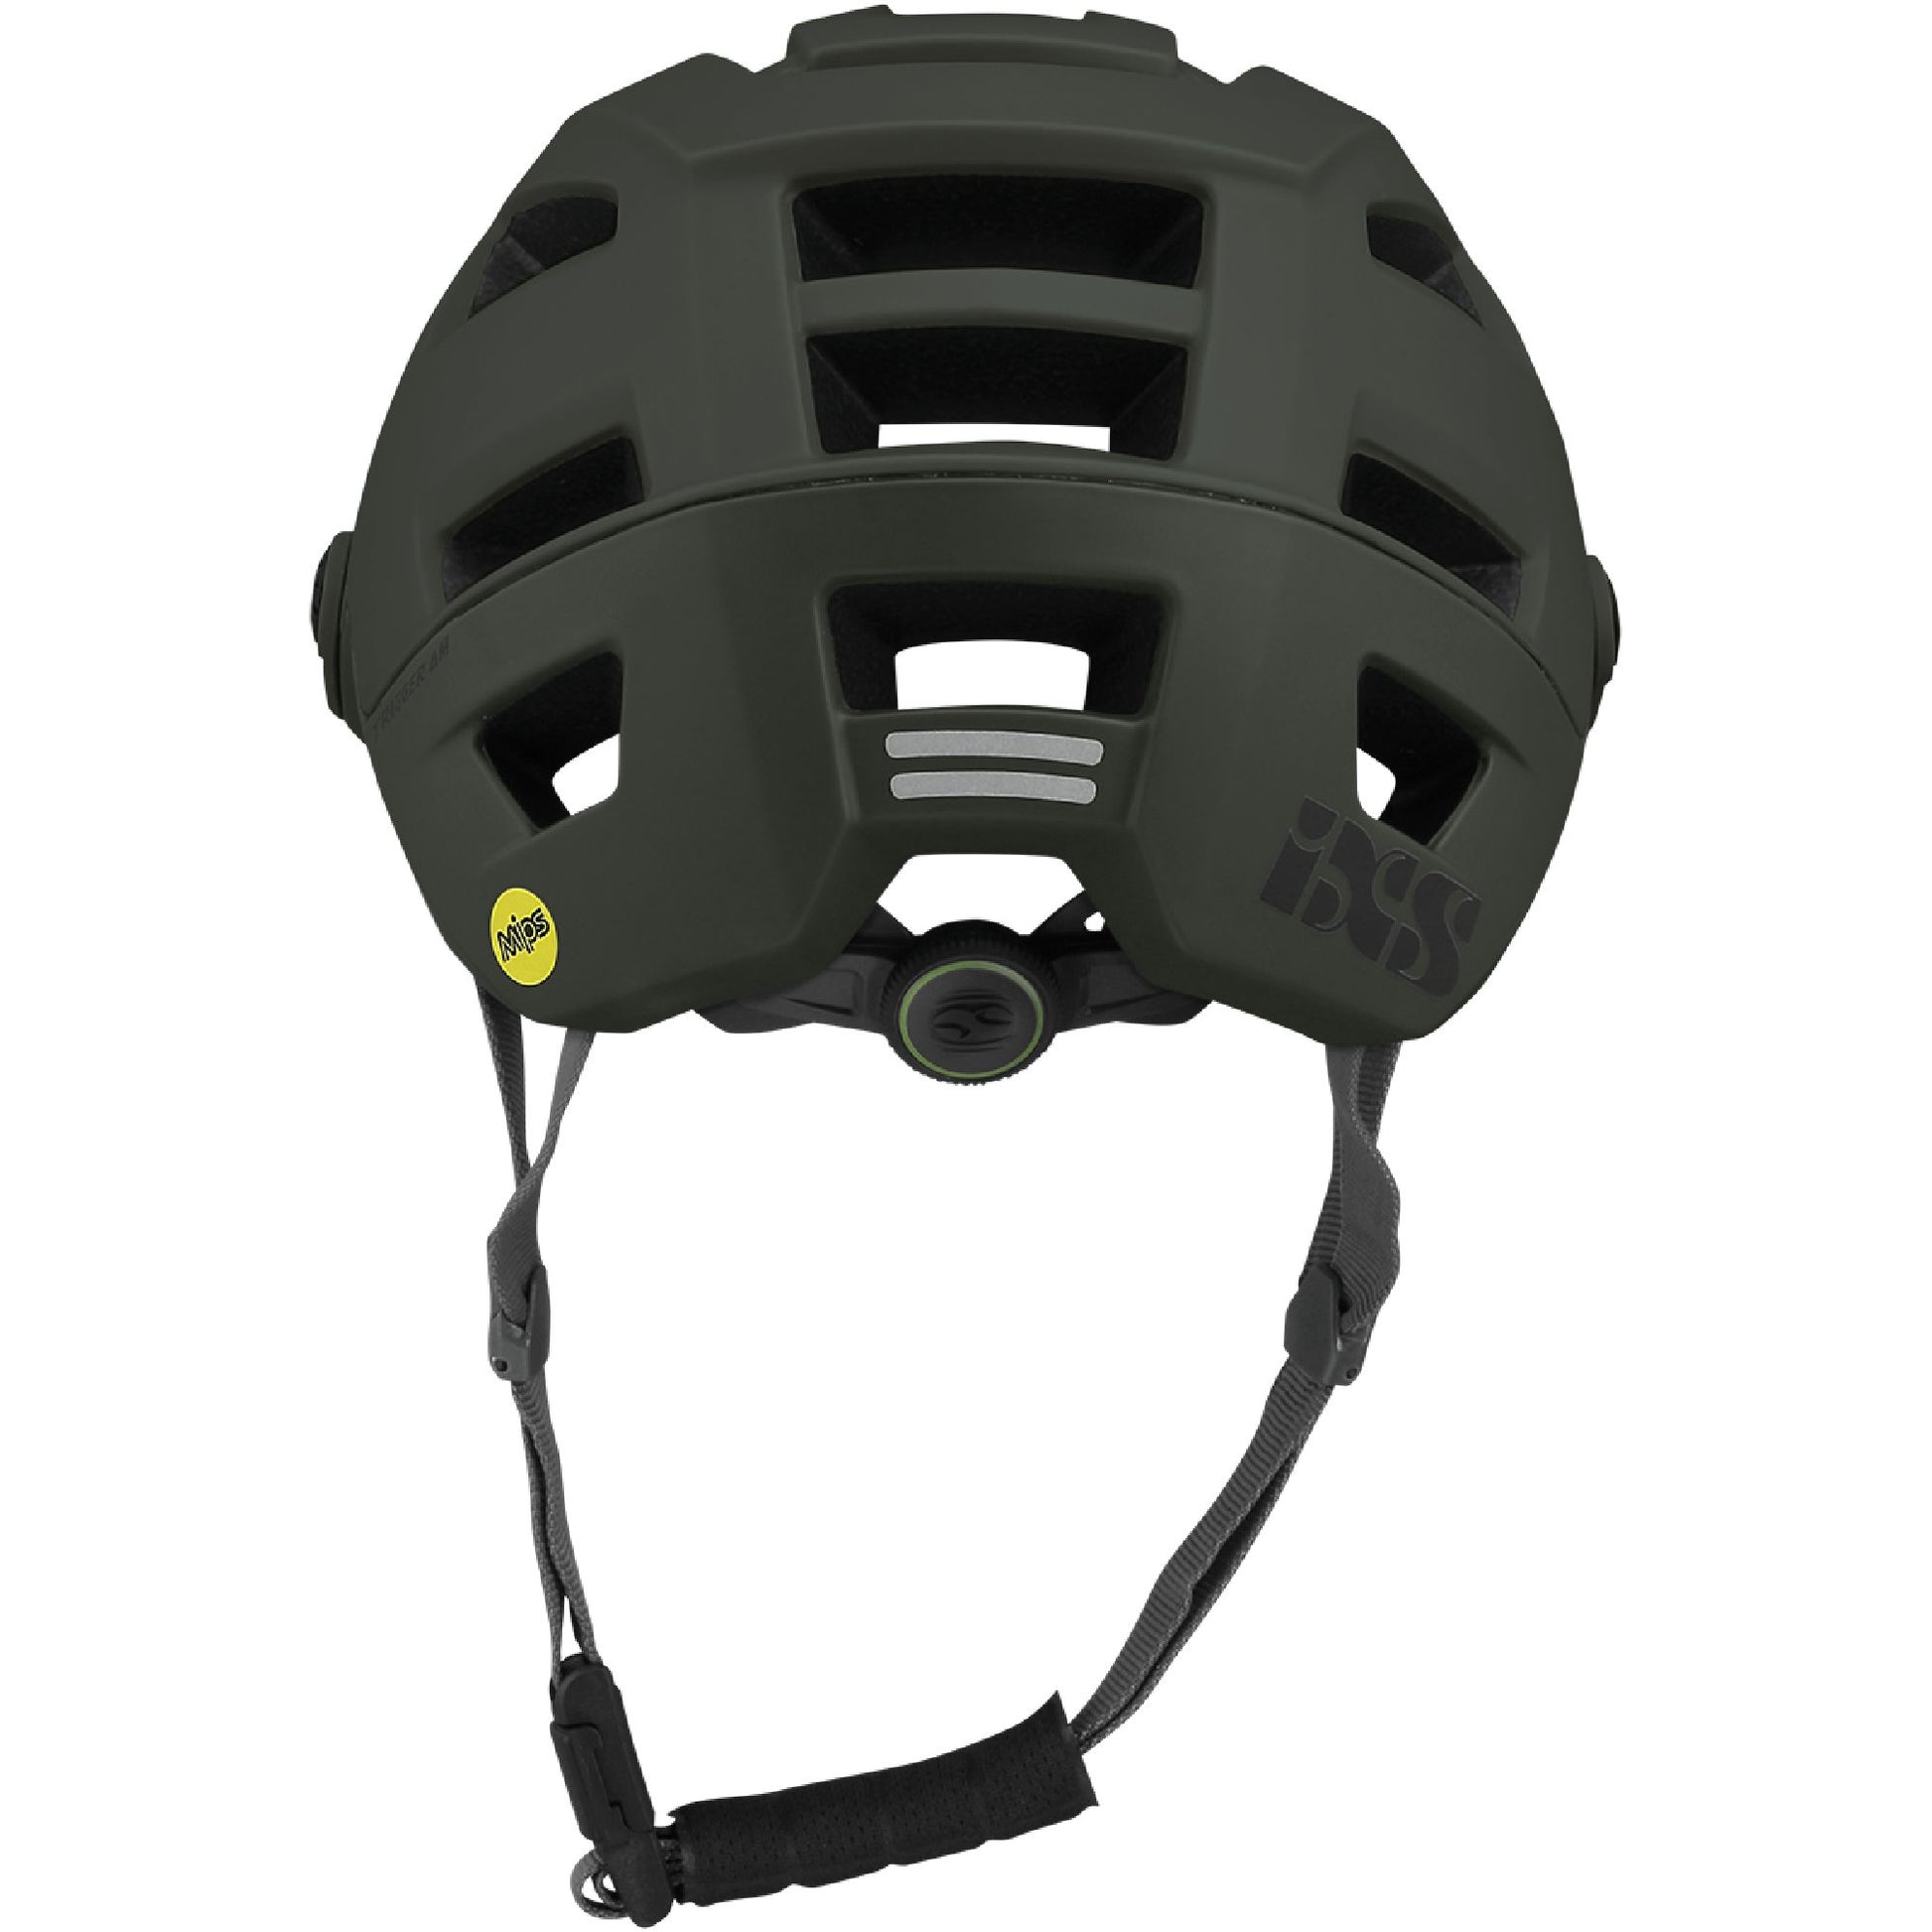 iXS Trigger AM MIPS Helmet Graphite Bike Helmets